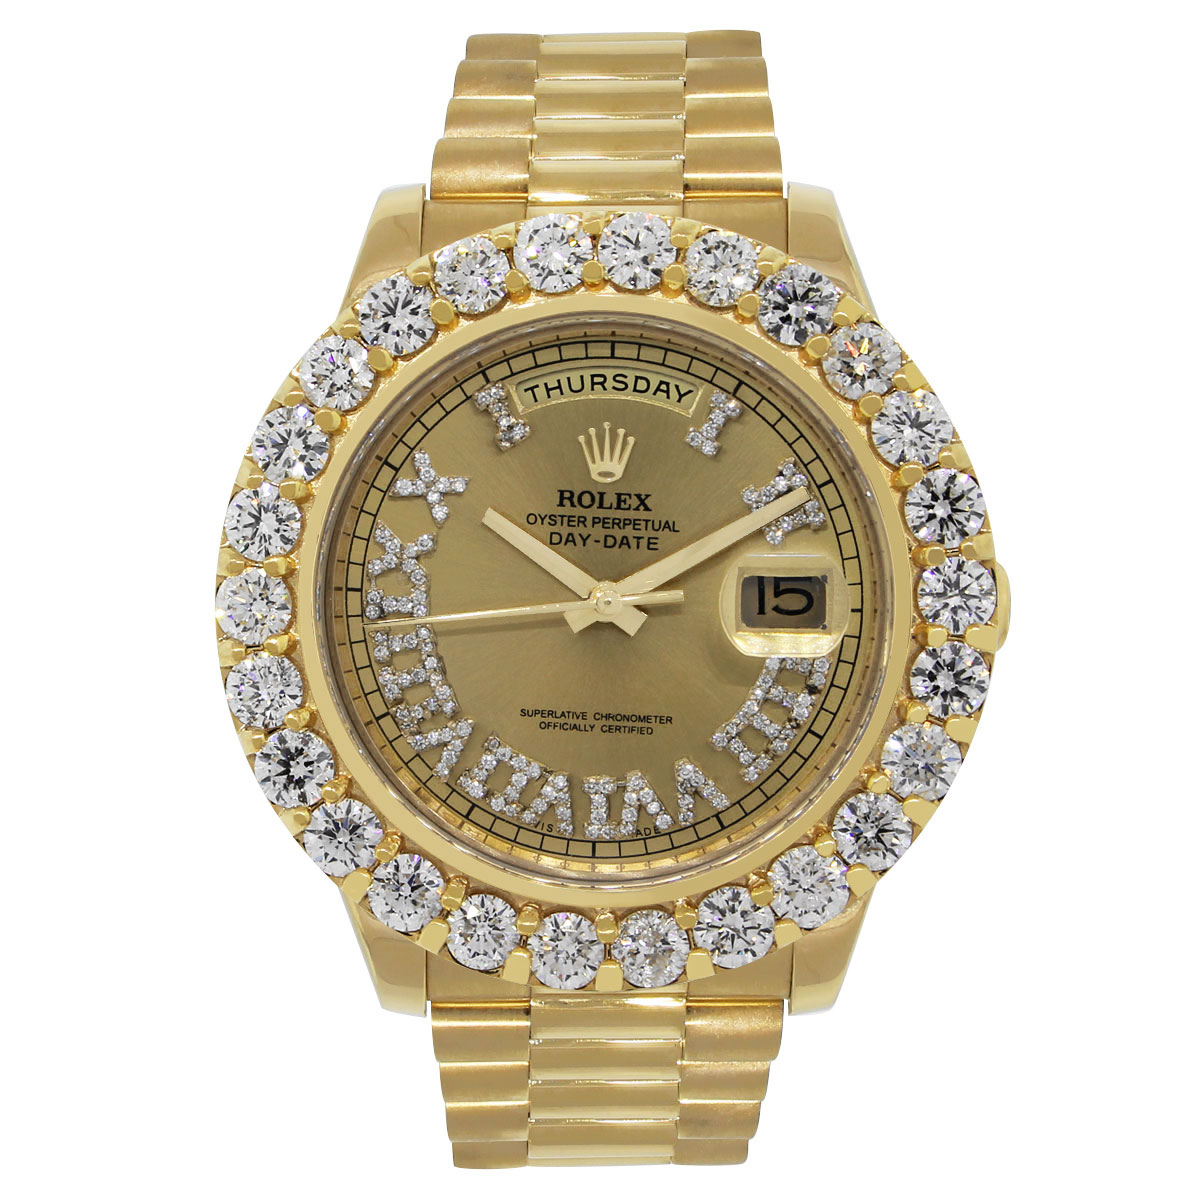 Rolex 218238 Day Date II 18k Yellow Gold Diamond Dial Watch